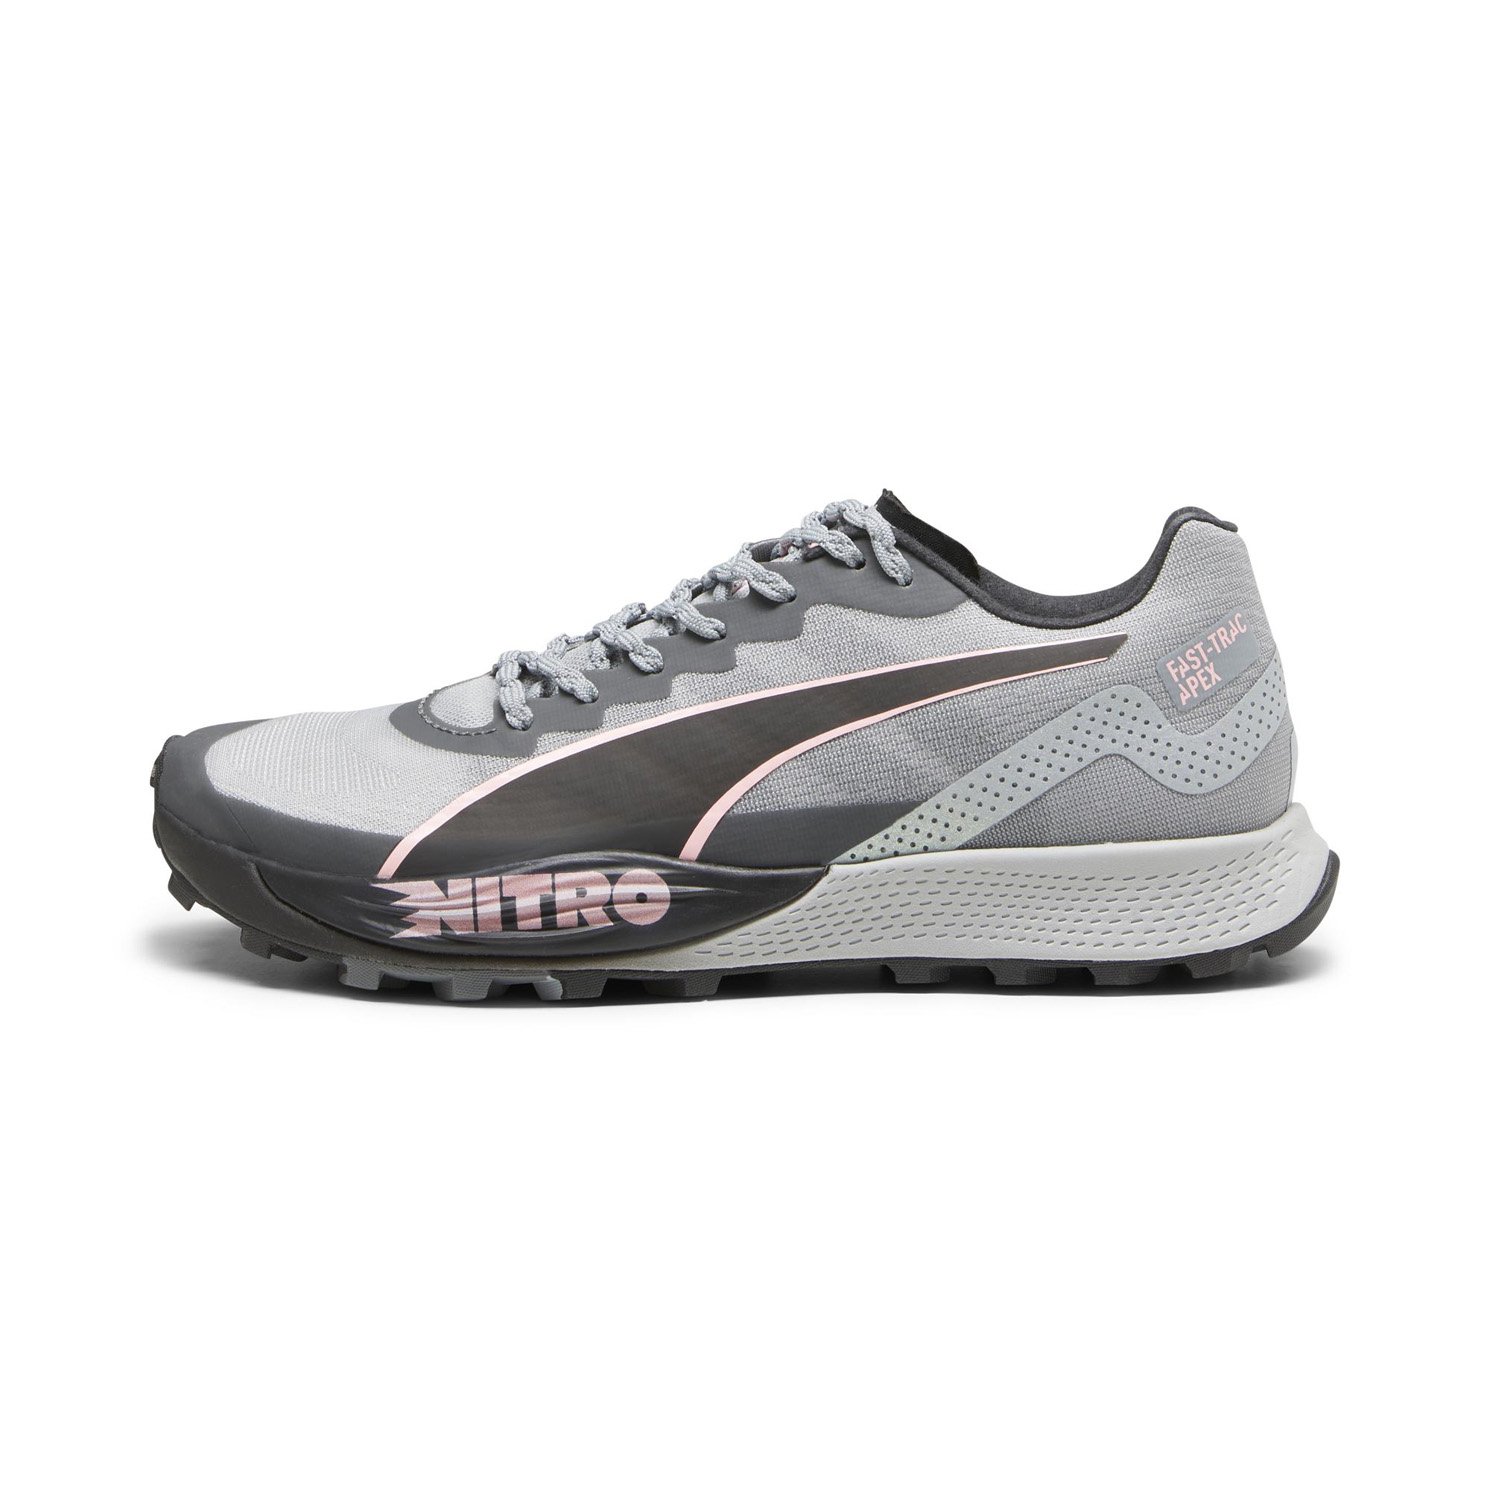 Puma Fast-Trac Apex Nitro Kadın Koşu Ayakkabısı - Gri - 1